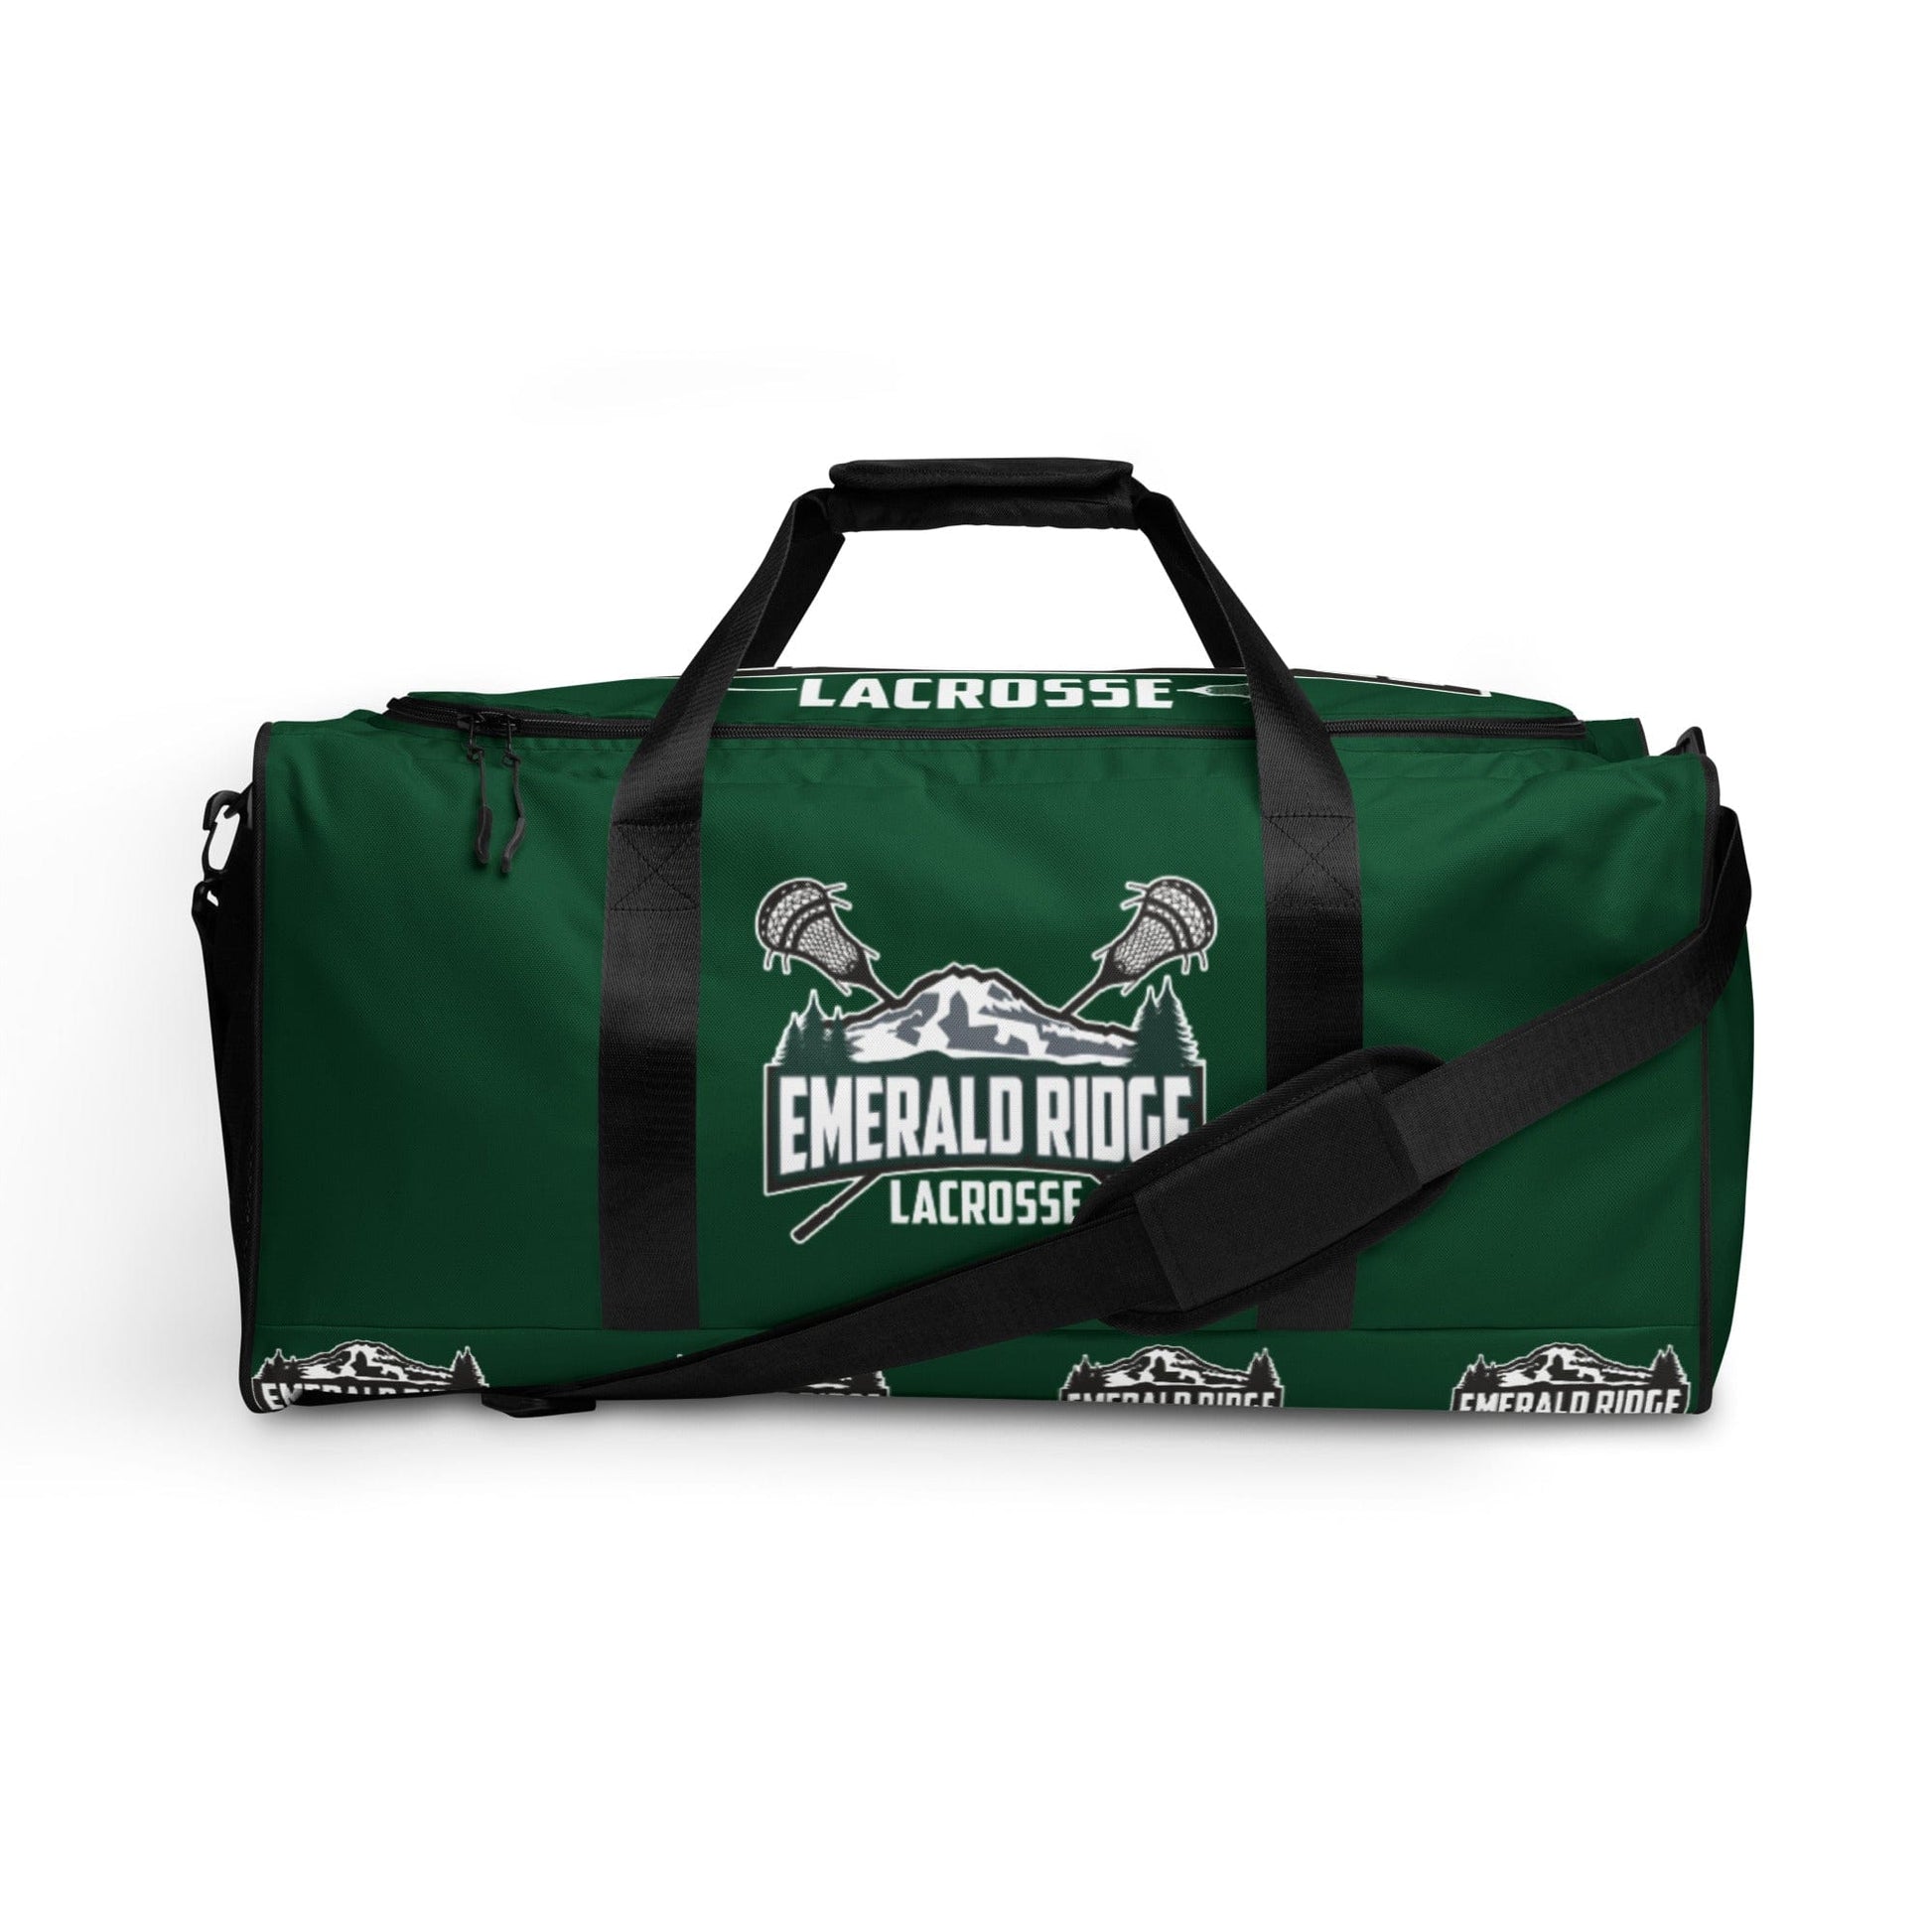 Emerald Ridge Lacrosse Sideline Bag Signature Lacrosse